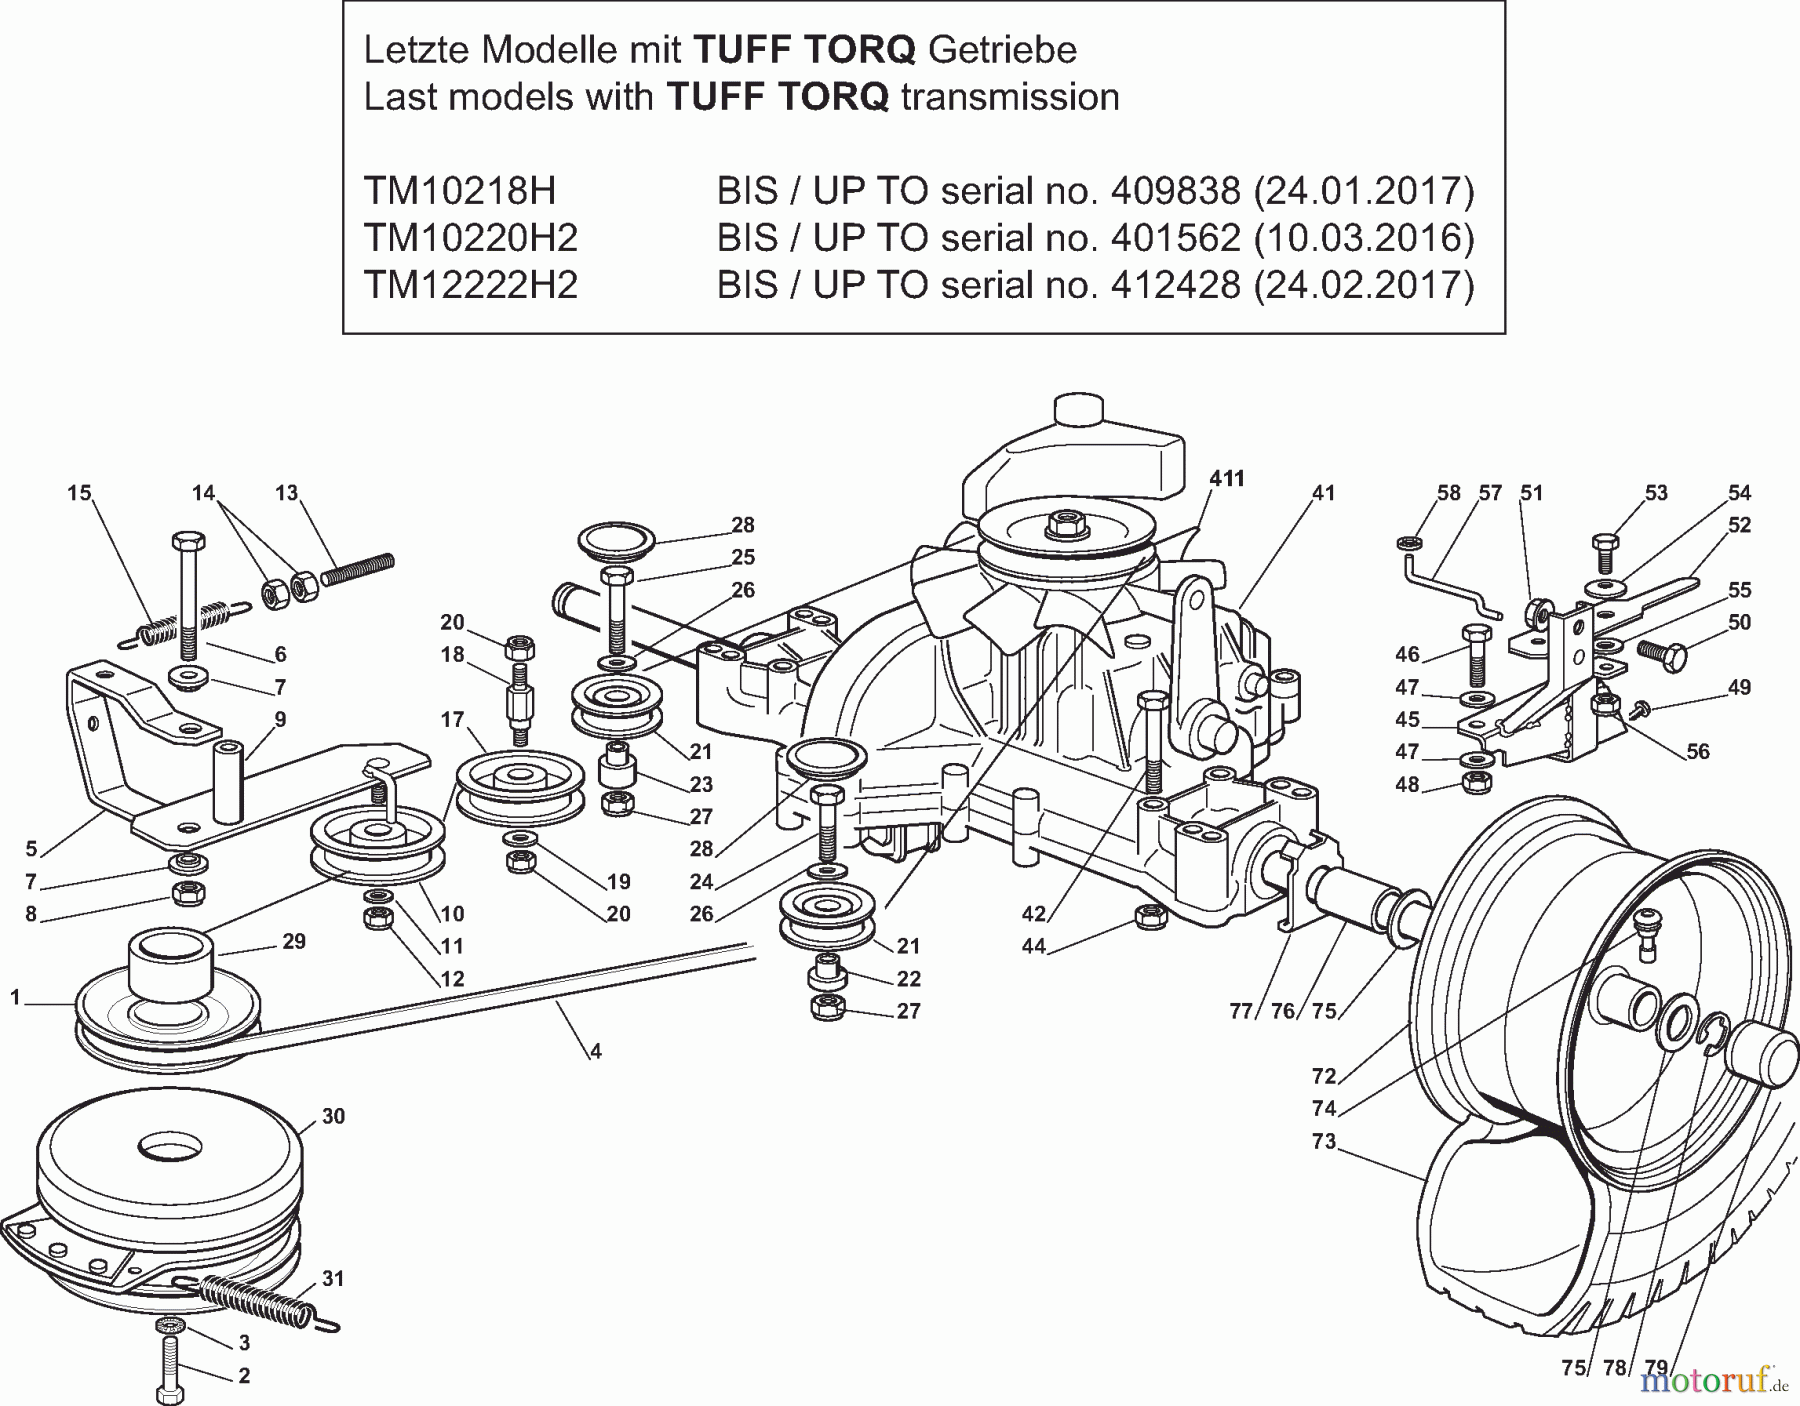  Dolmar Rasentraktoren TM10220H2 TM-102.20 H2 (2013-2014) 6y  Getriebe